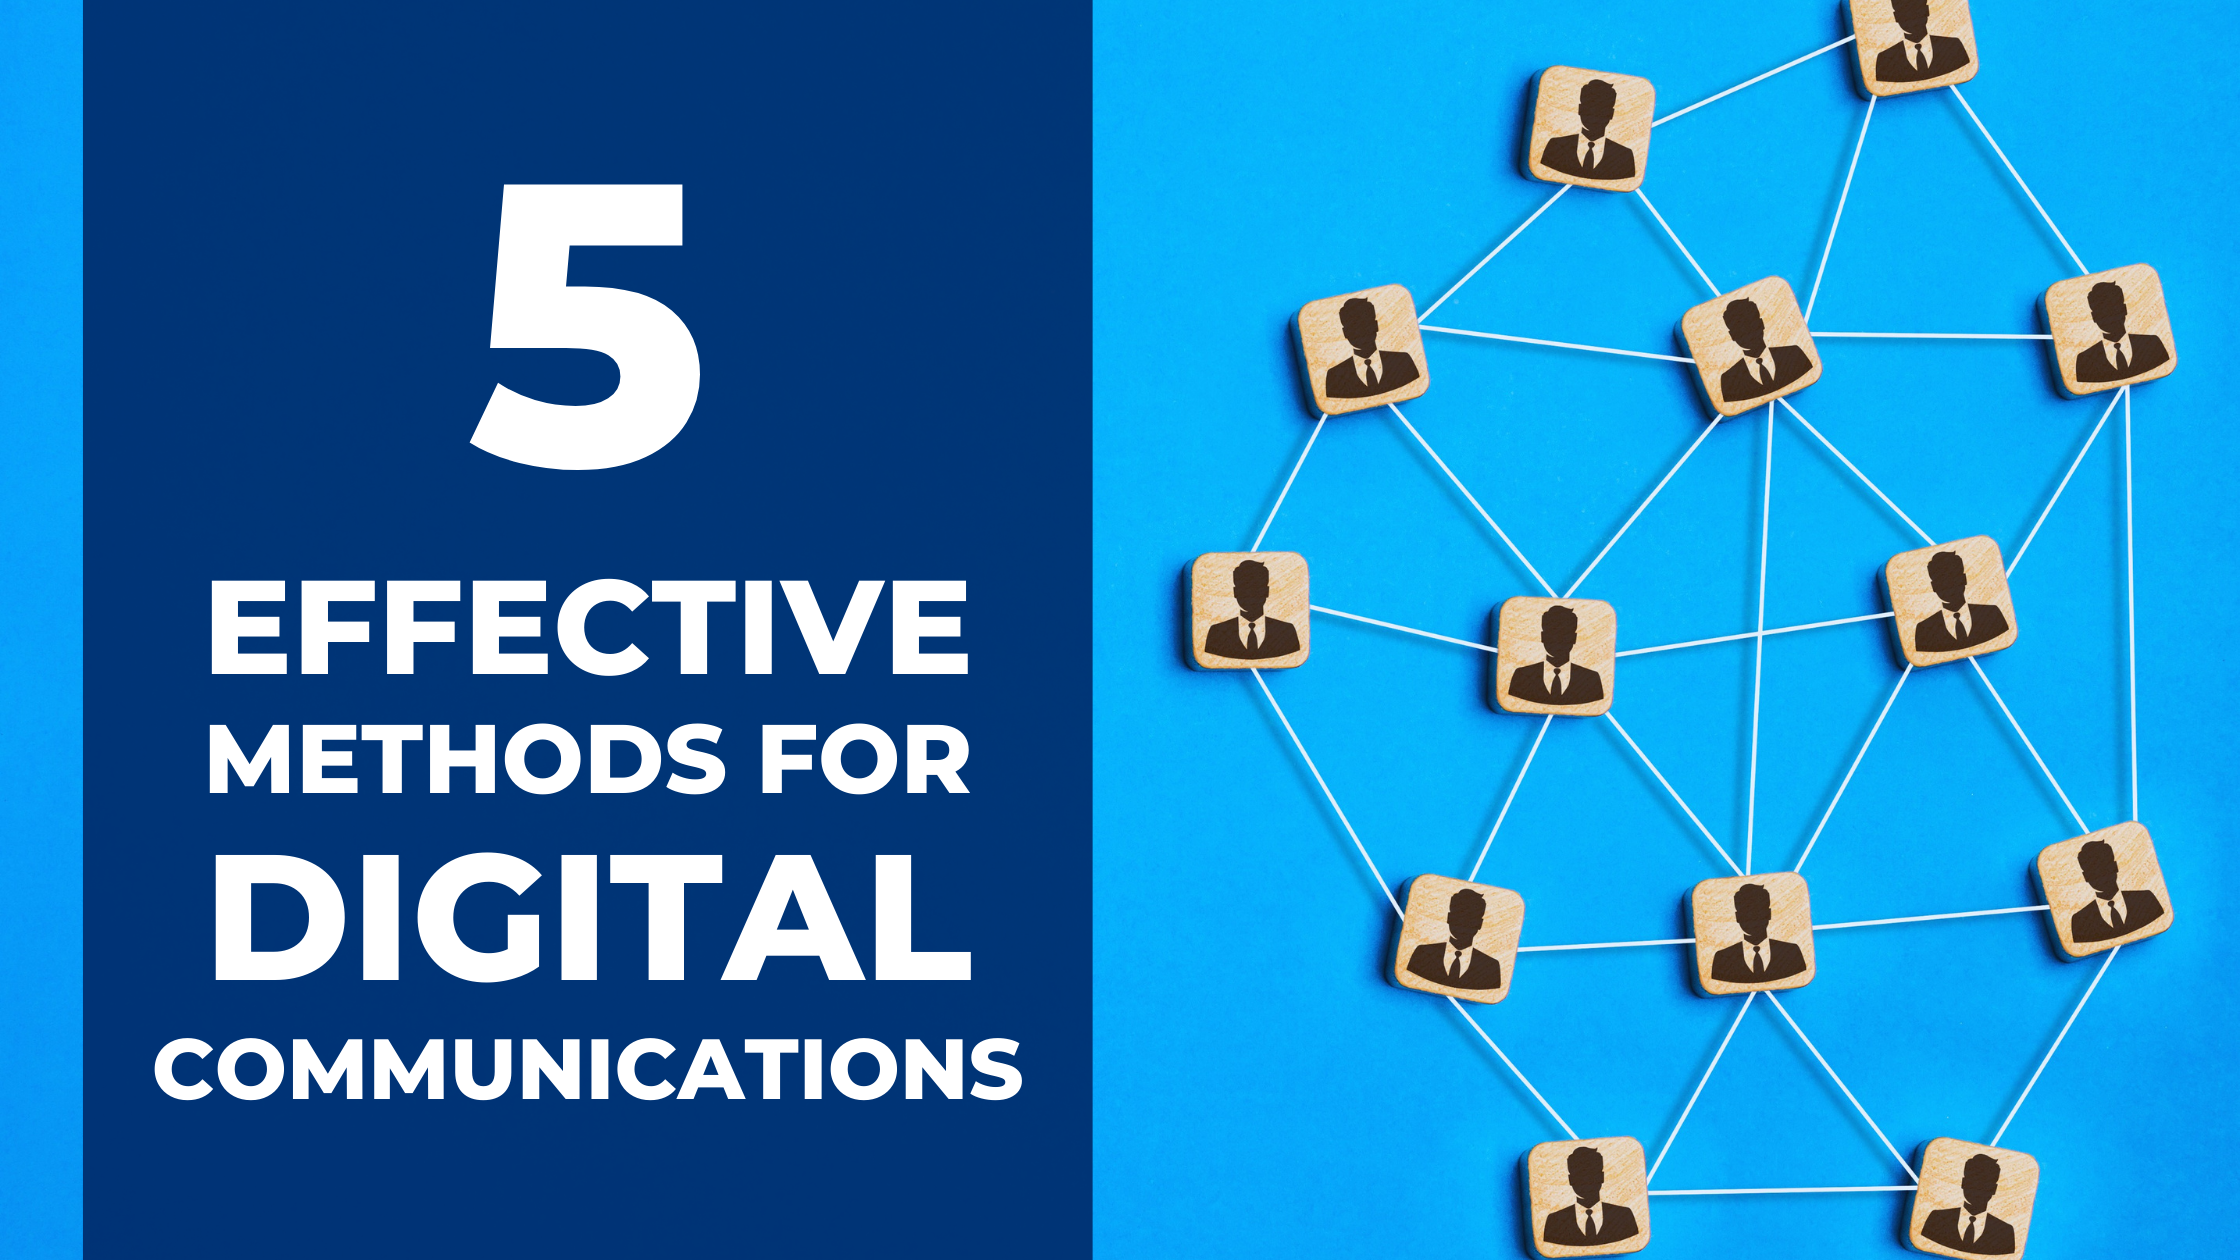 5 Effective Methods for Digital Communications